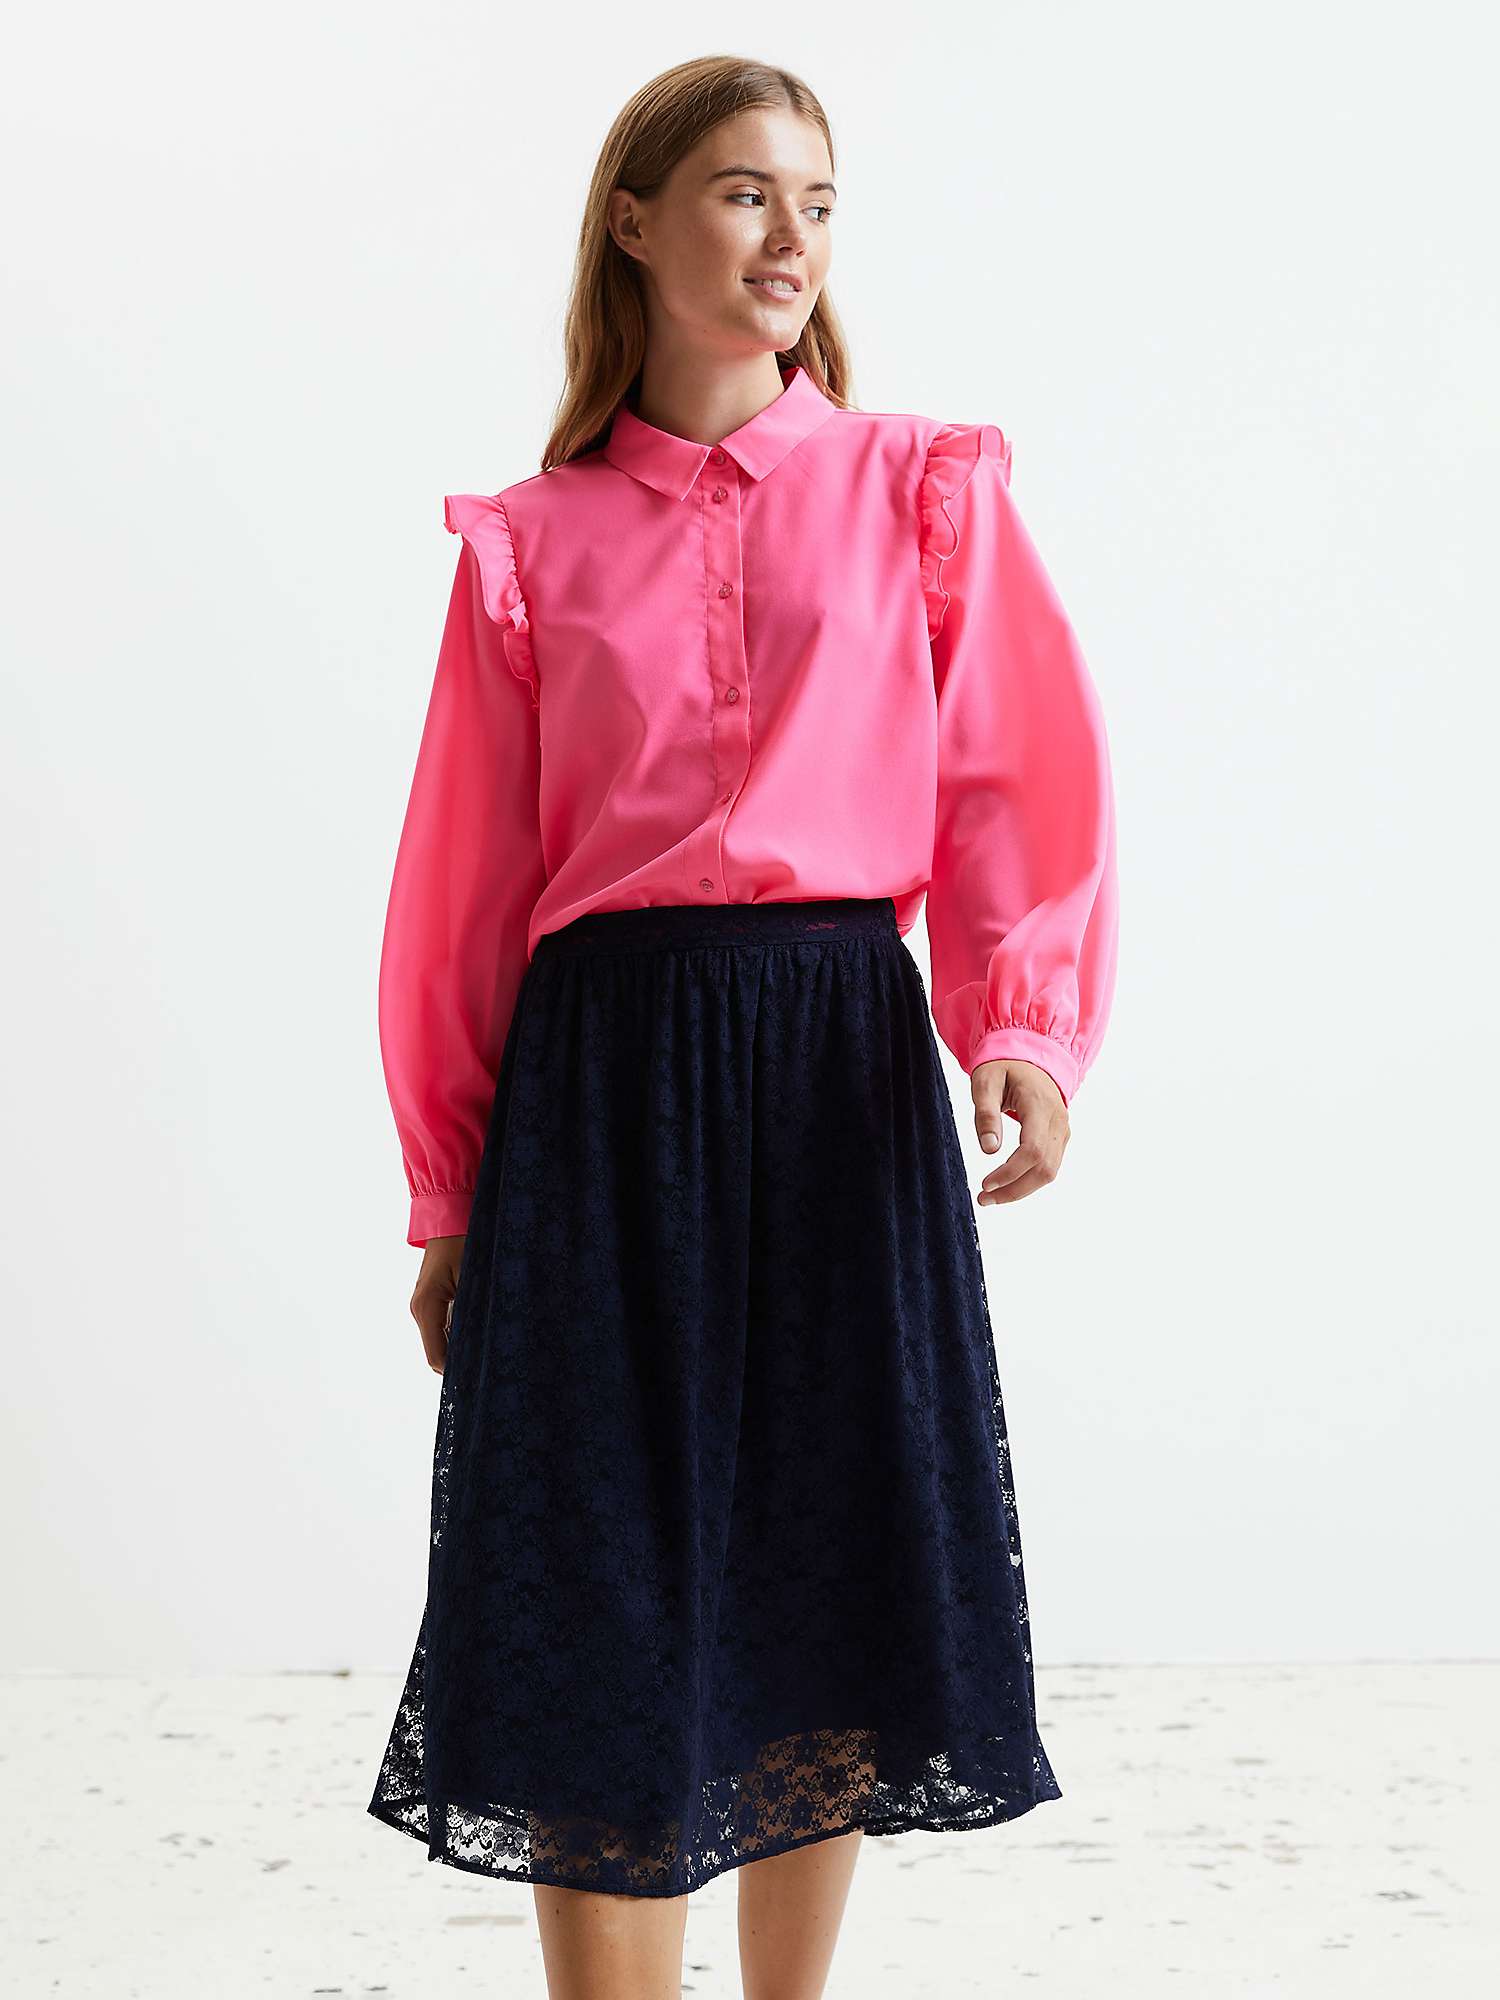 Buy Lollys Laundry Ella Lace Midi Skirt, Dark Blue Online at johnlewis.com